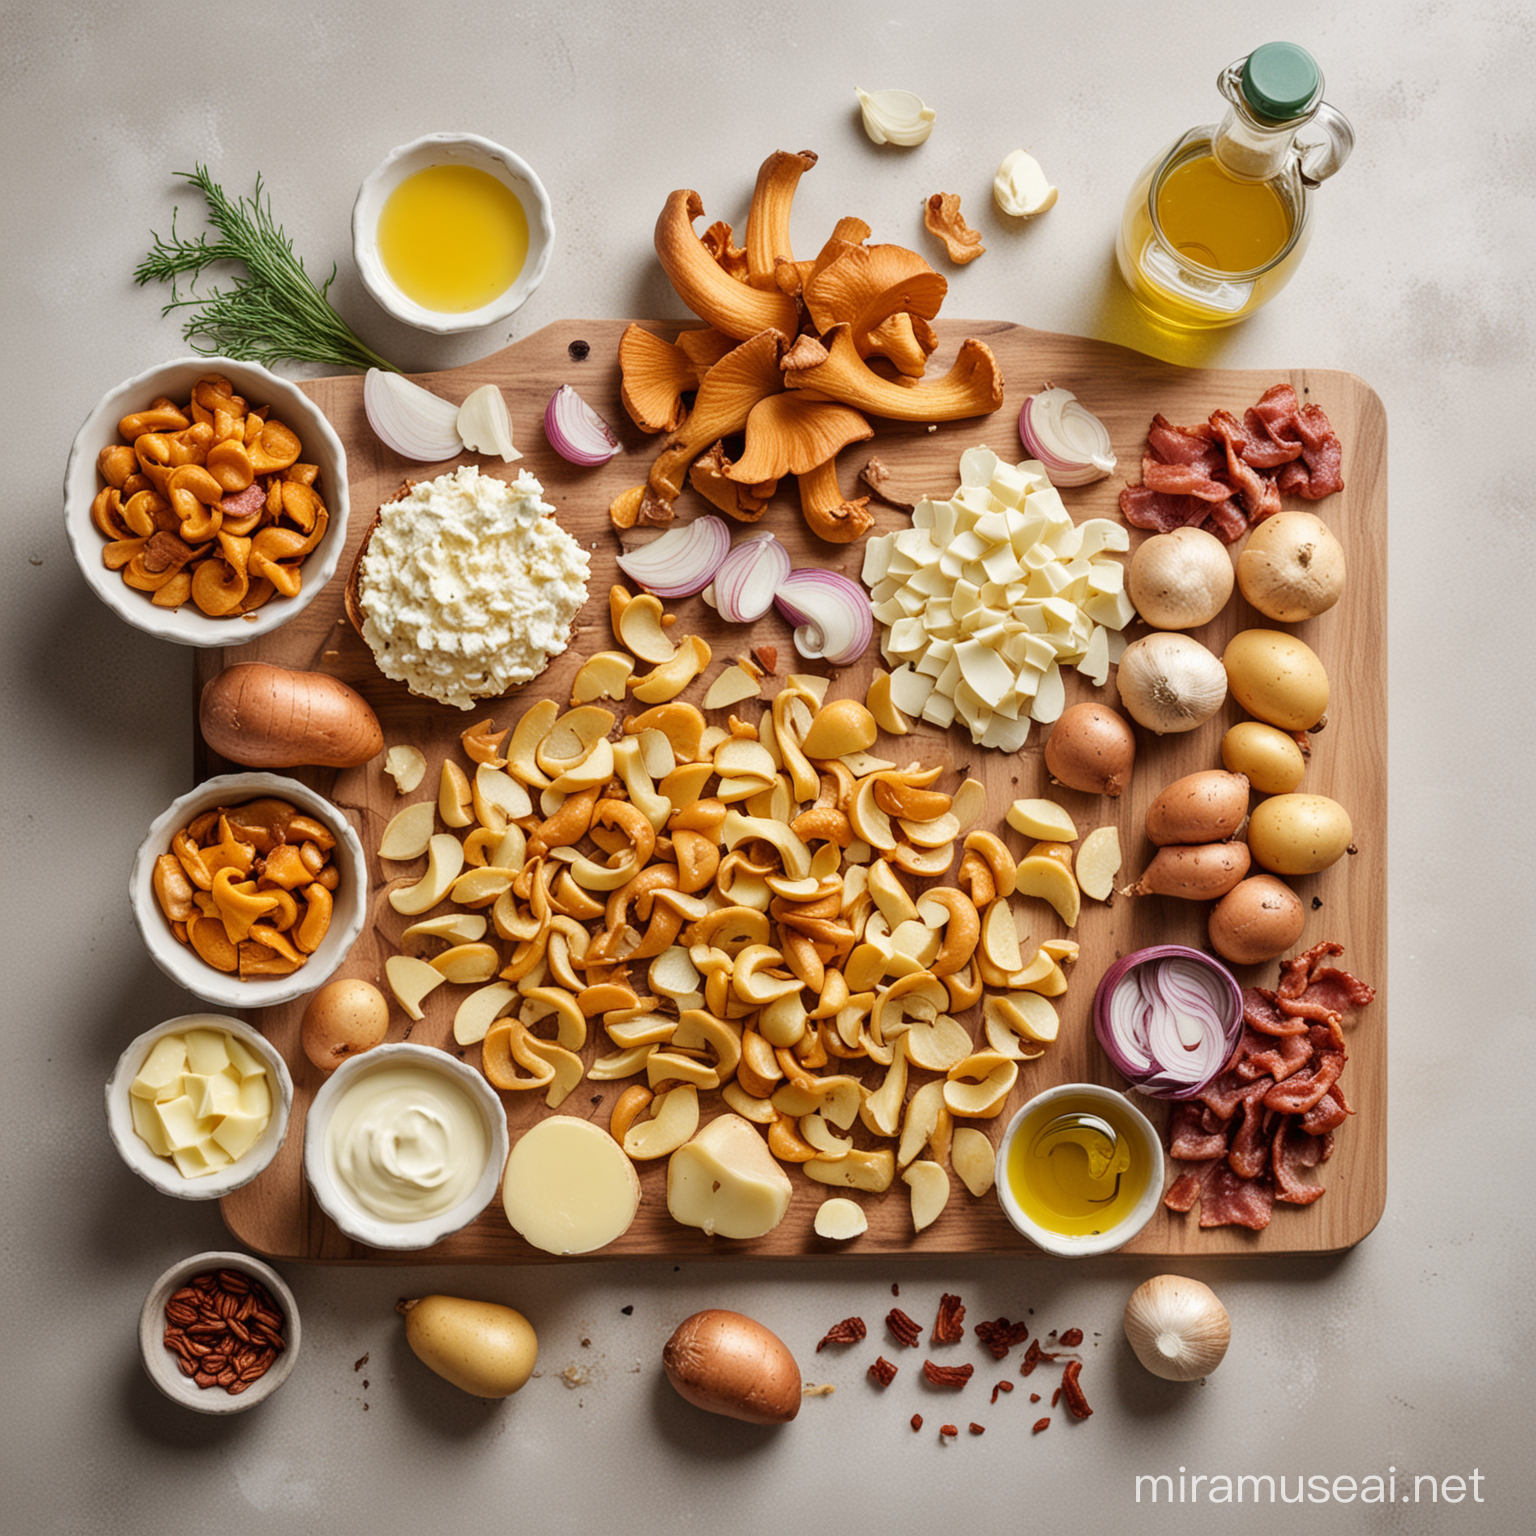 Ingredients for Creamy Chanterelle Mushroom Potato Soup Recipe